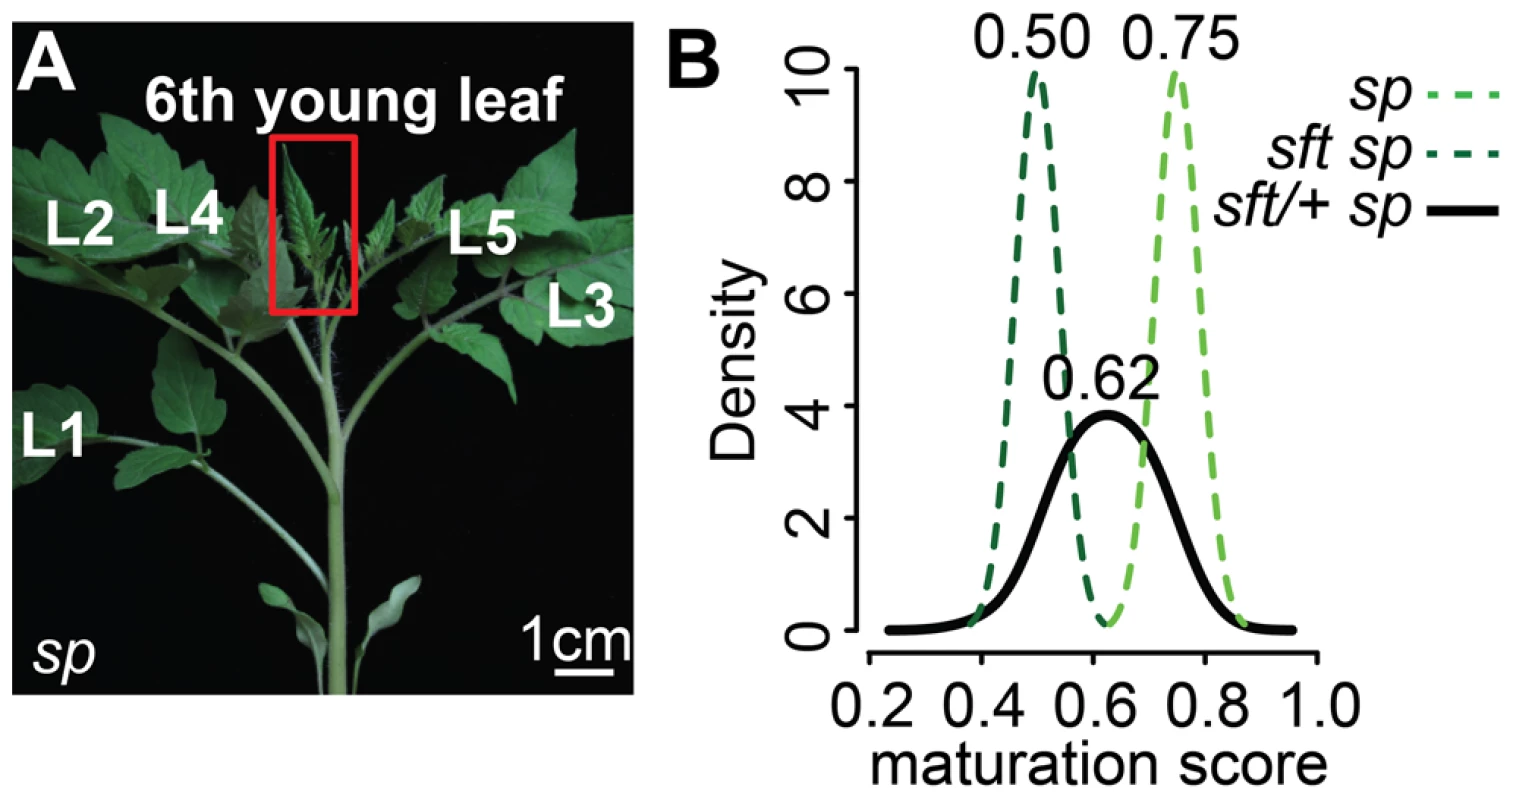 Transcriptome profiling reveals an early semi-dominant delay on seedling development from <i>sft/</i>+ heterozygosity.